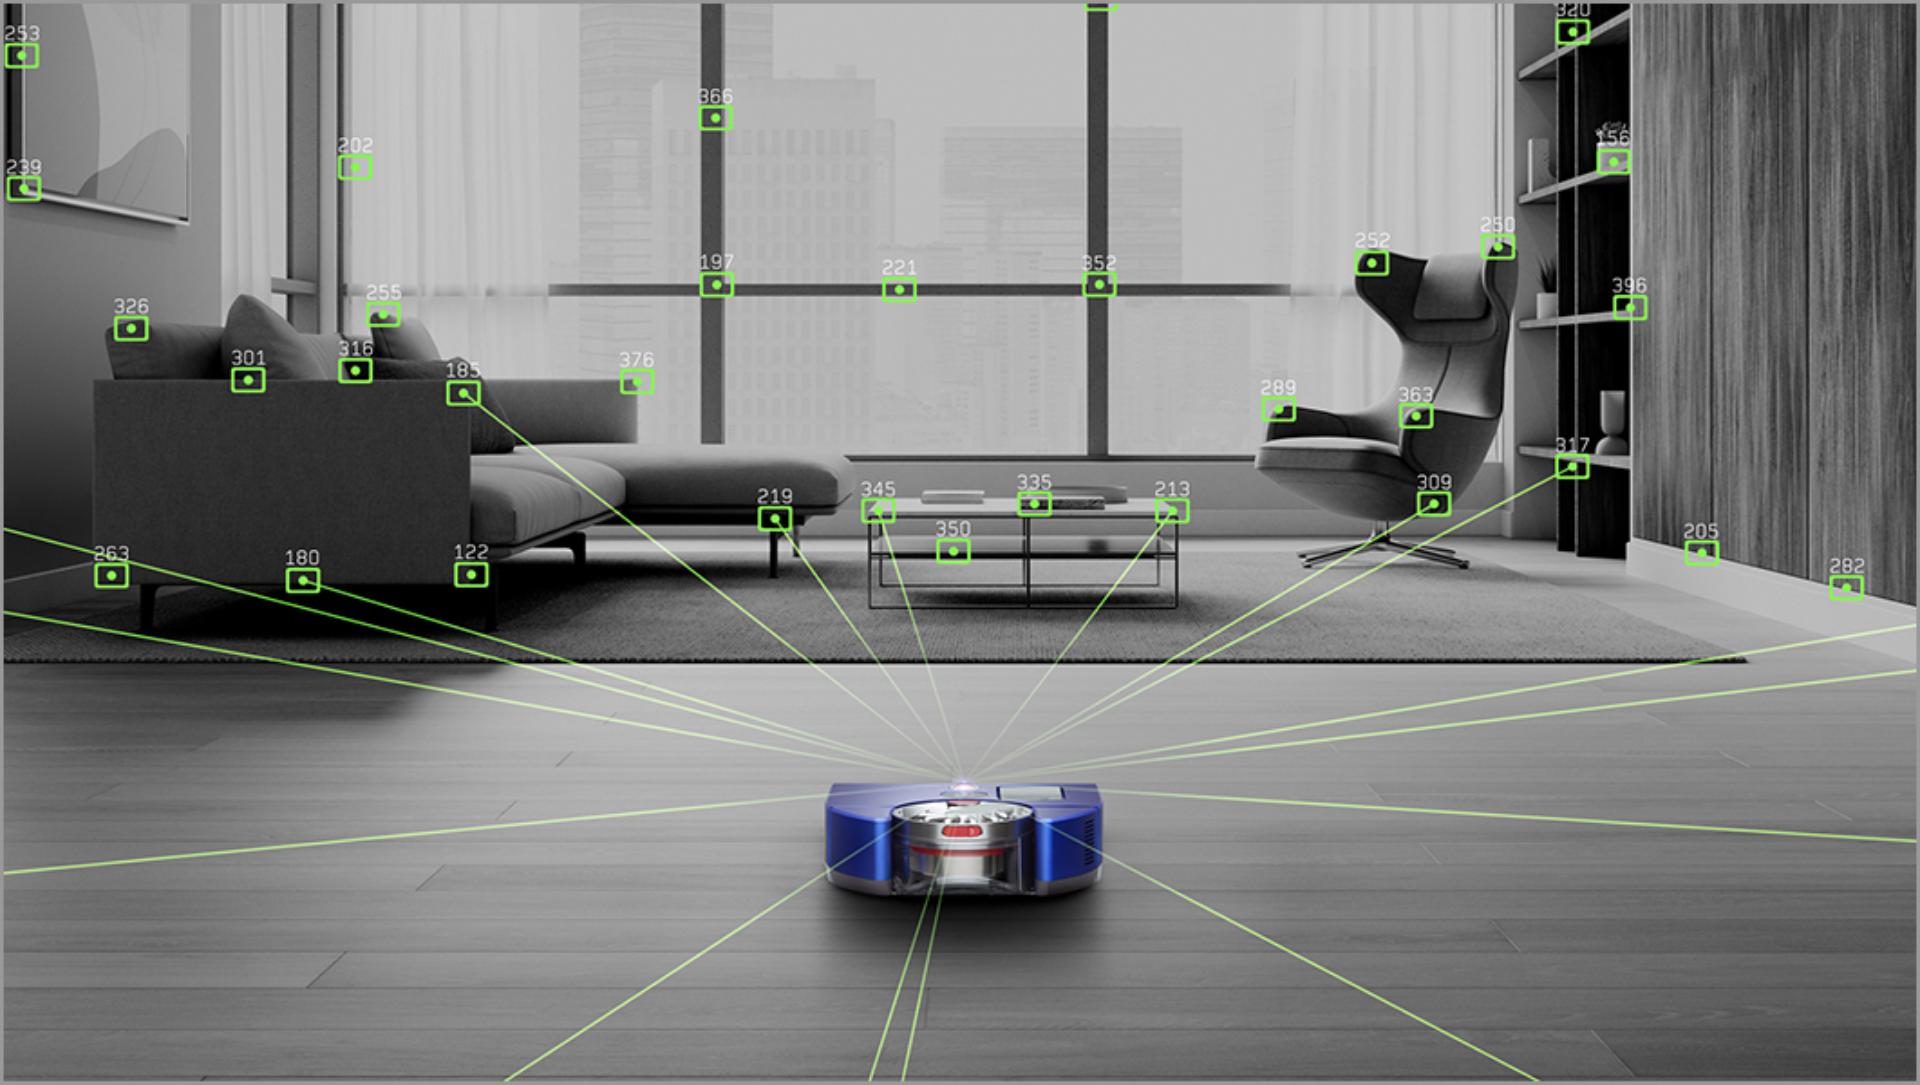 Visualisation of the robot analysing its surroundings